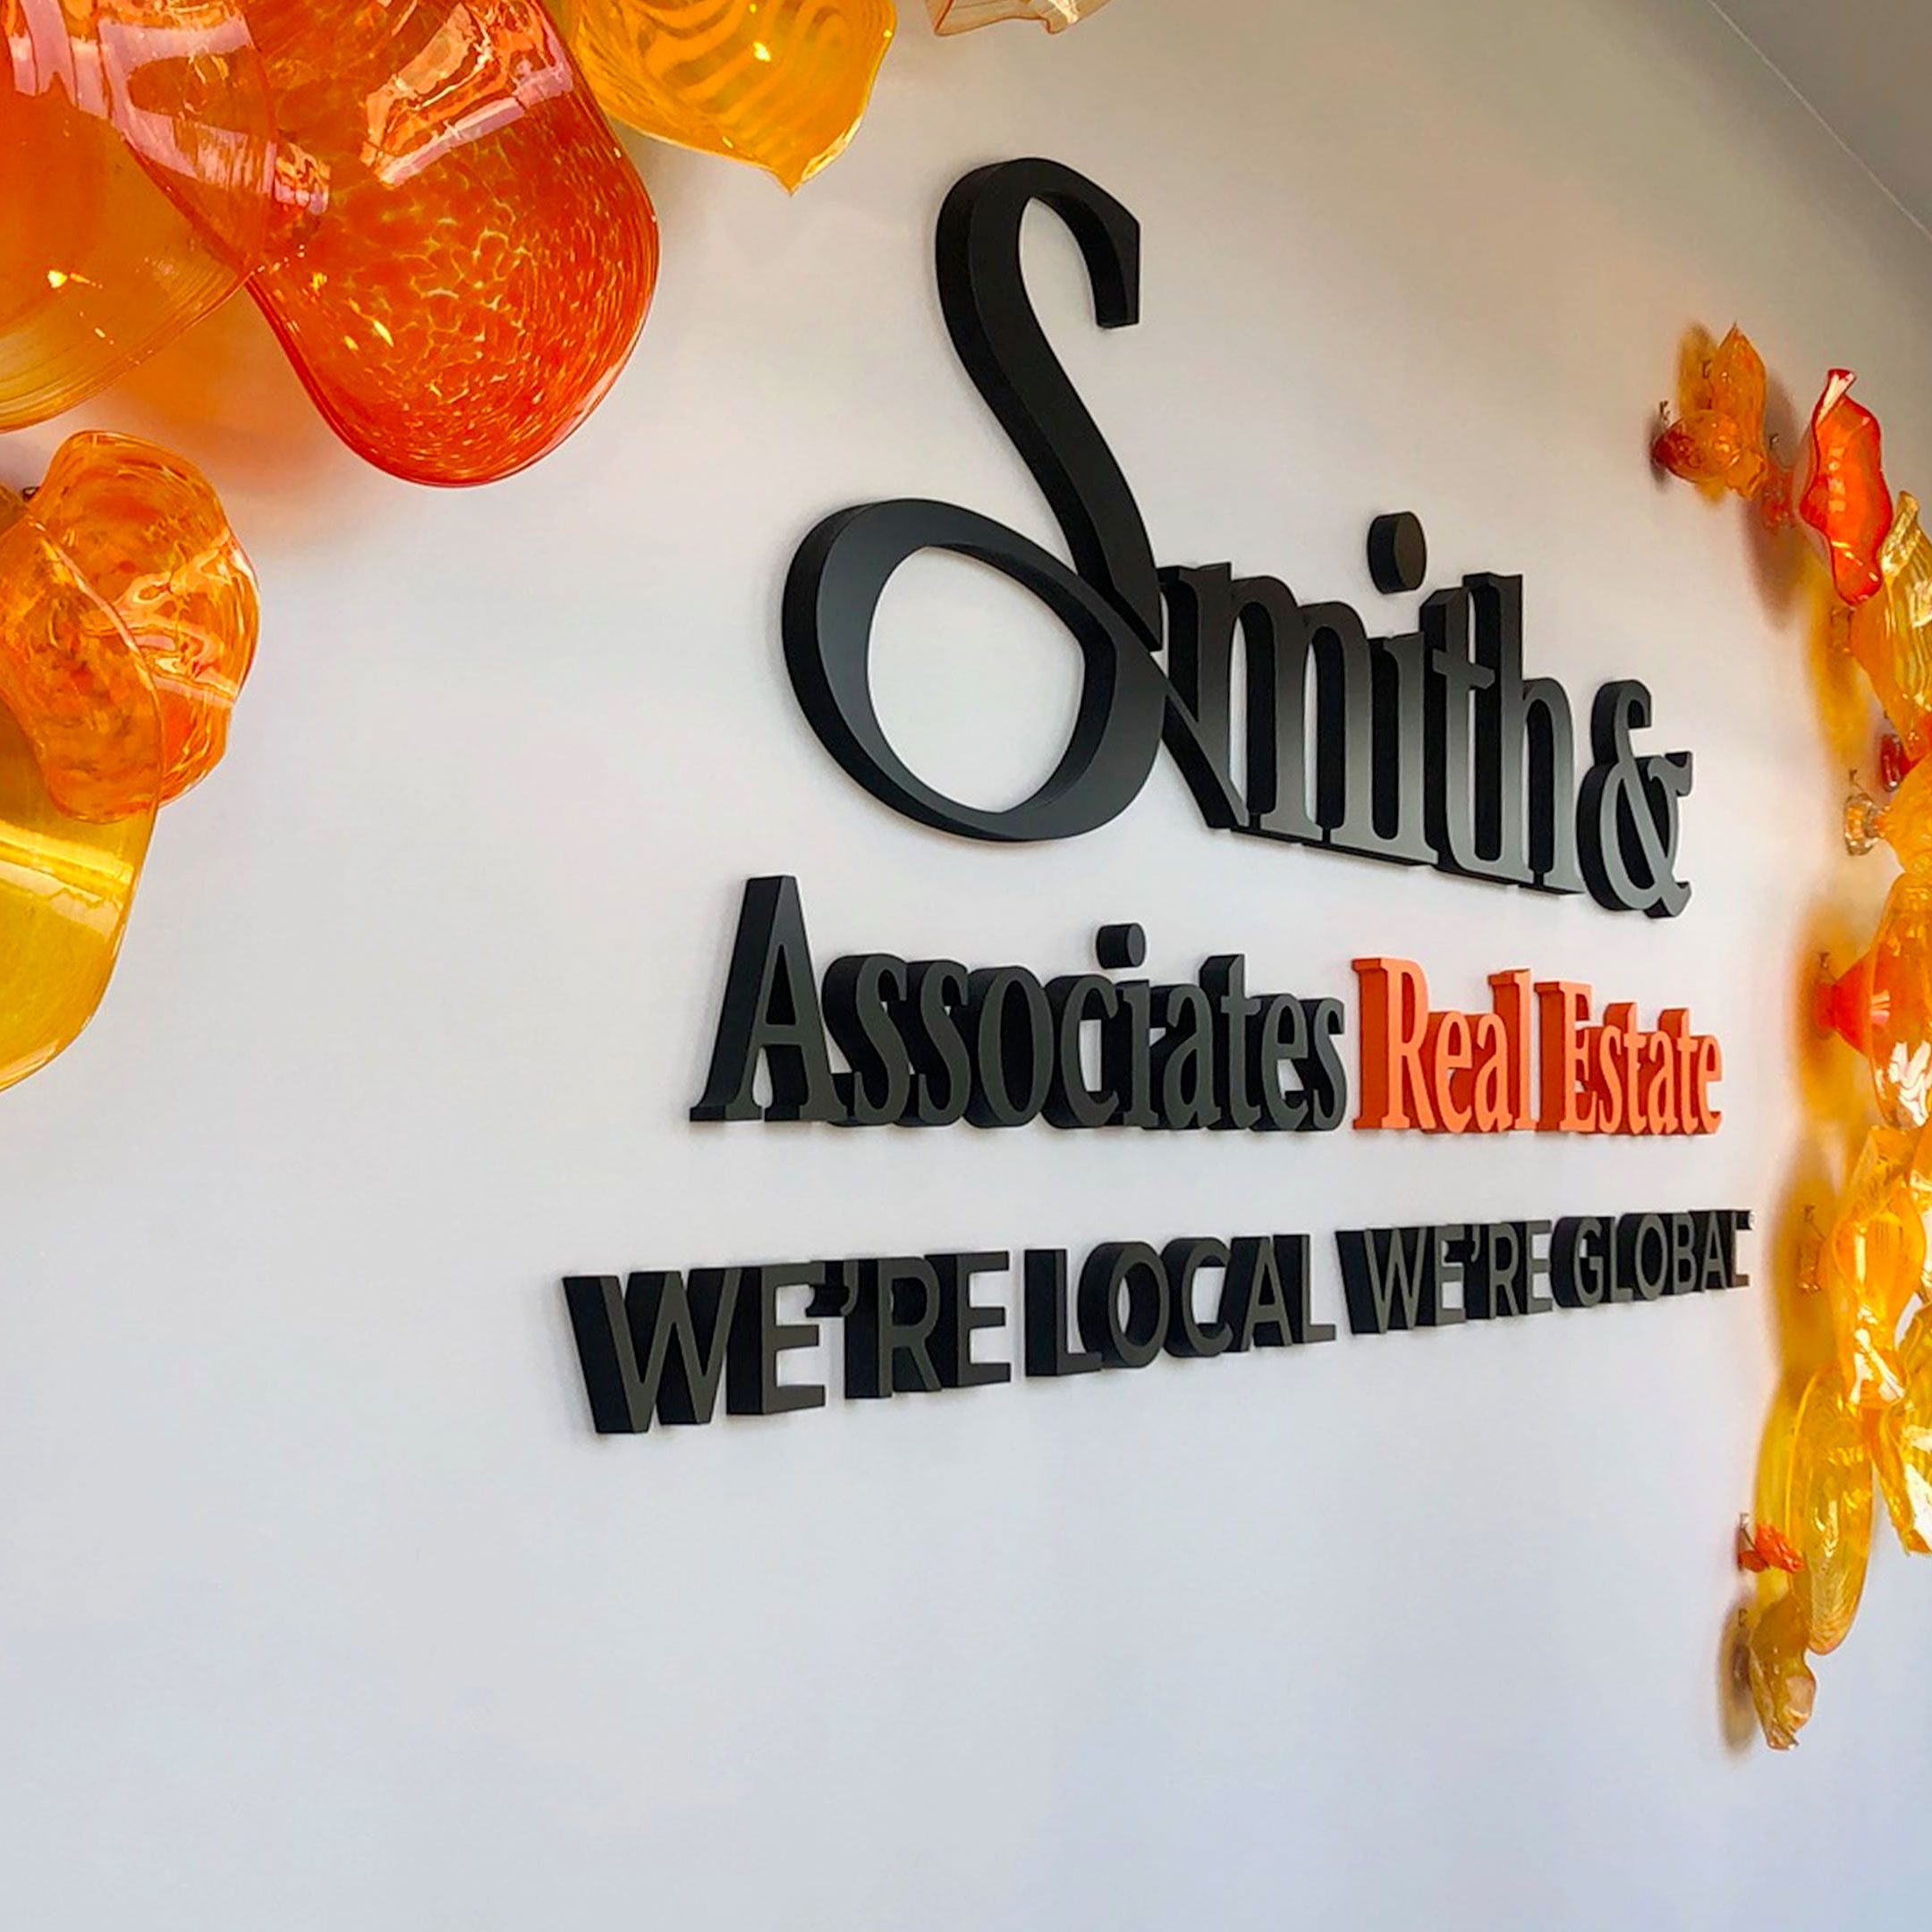 Smith and Associates office lobby